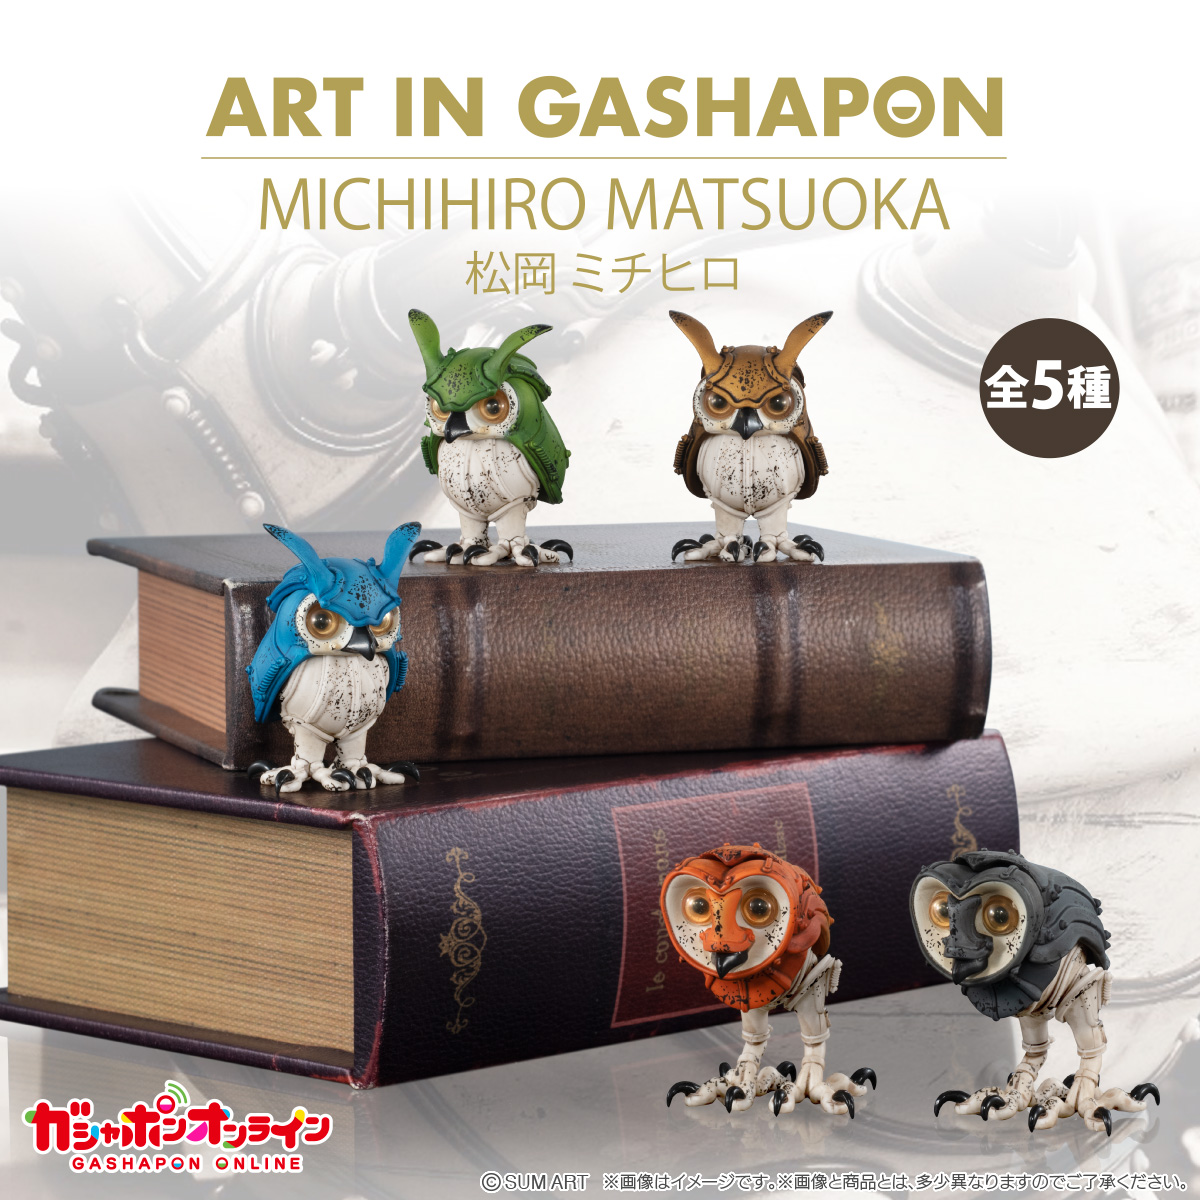 Art in Gashapon 松岡ミチヒロ | ナムコパークス オンラインストア